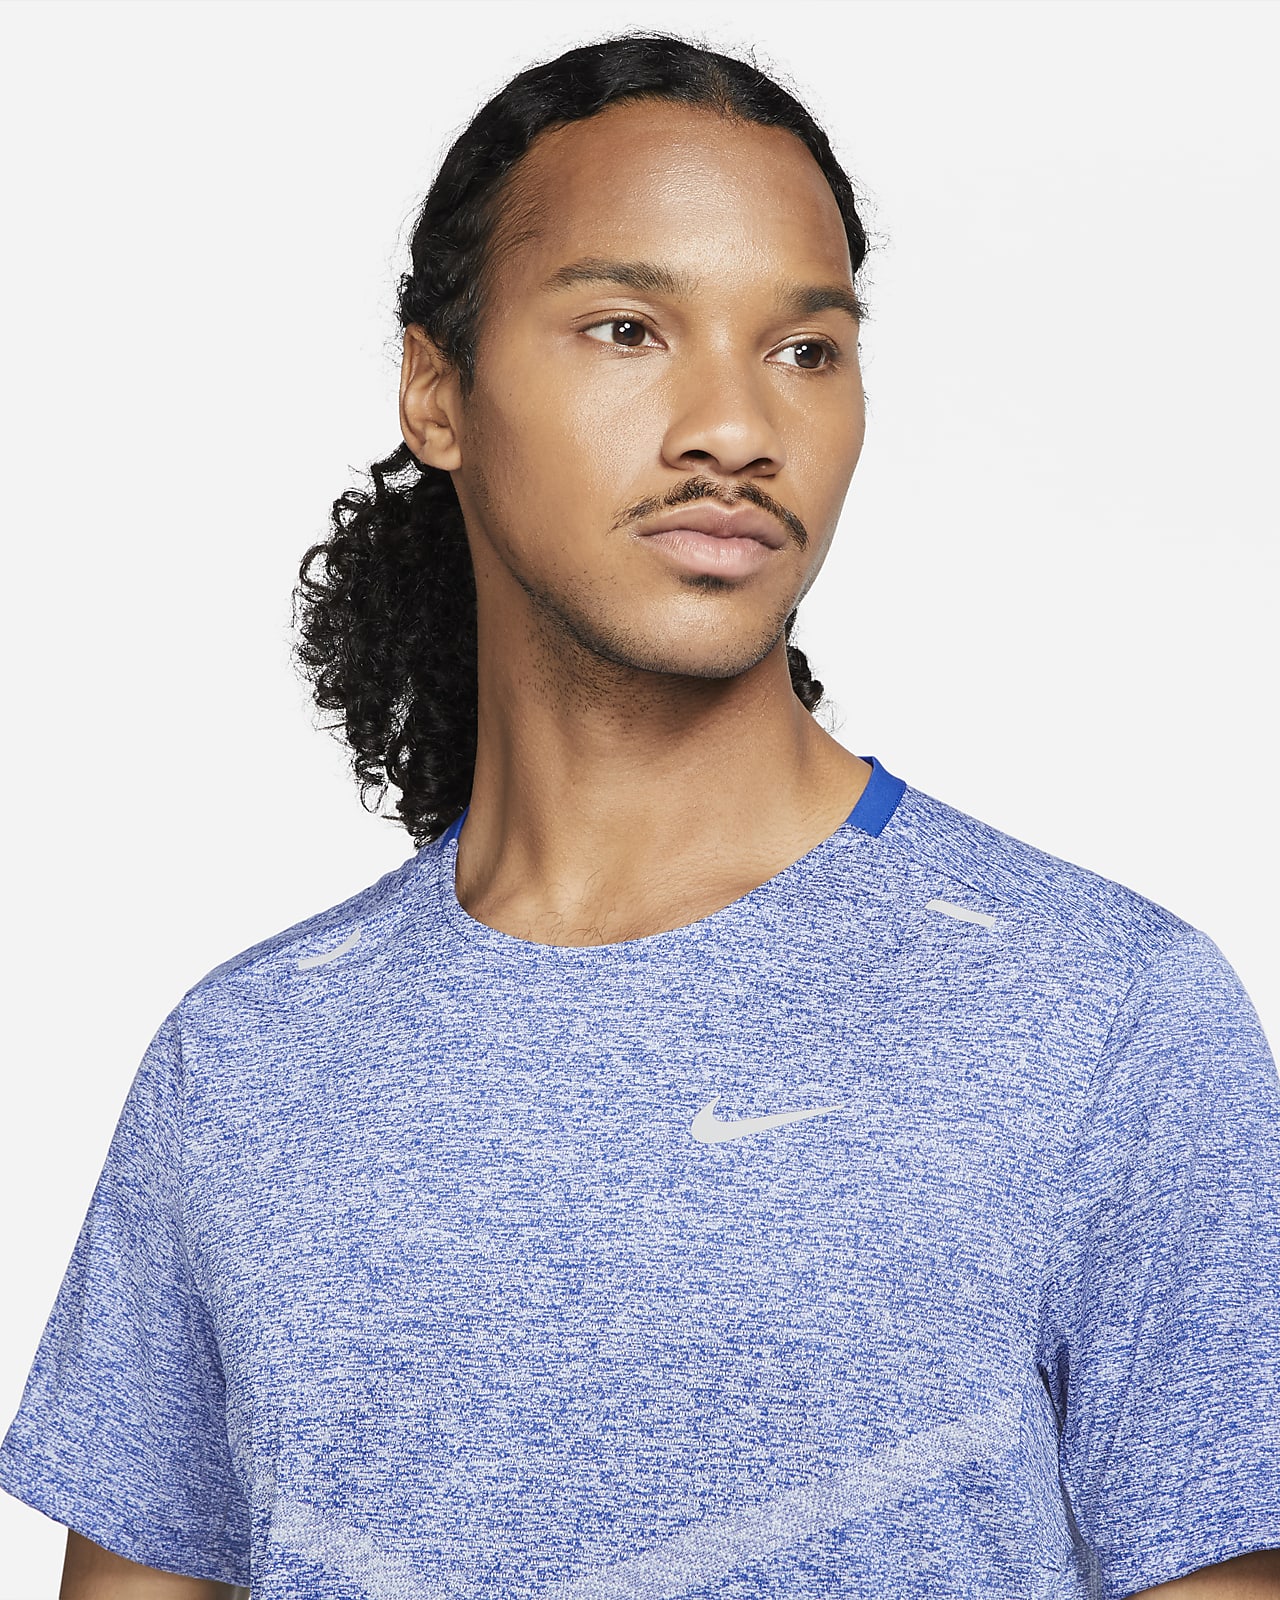 Nike Rise 365 Men's Dri-FIT Short-Sleeve Running Top